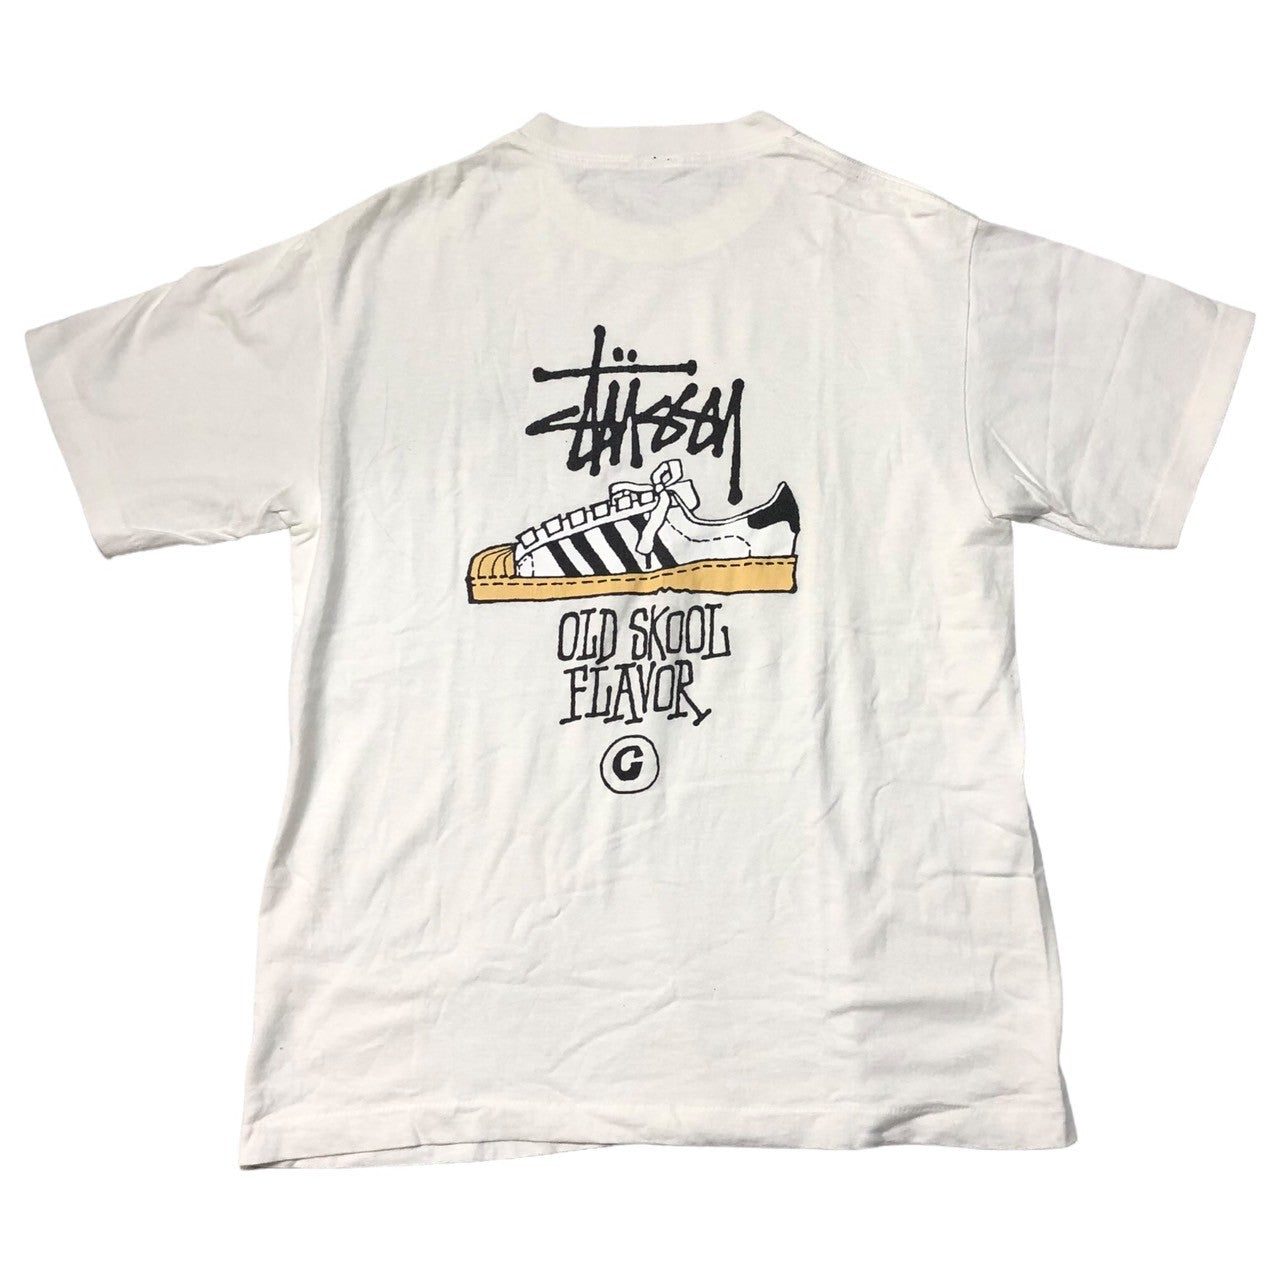 STUSSY(ステューシー) 80's "OLD SKOOL FLAVOR" VINTAGE TEE ヴィンテージ Tシャツ  M ホワイト SUPERSTAR スーパースター 半袖